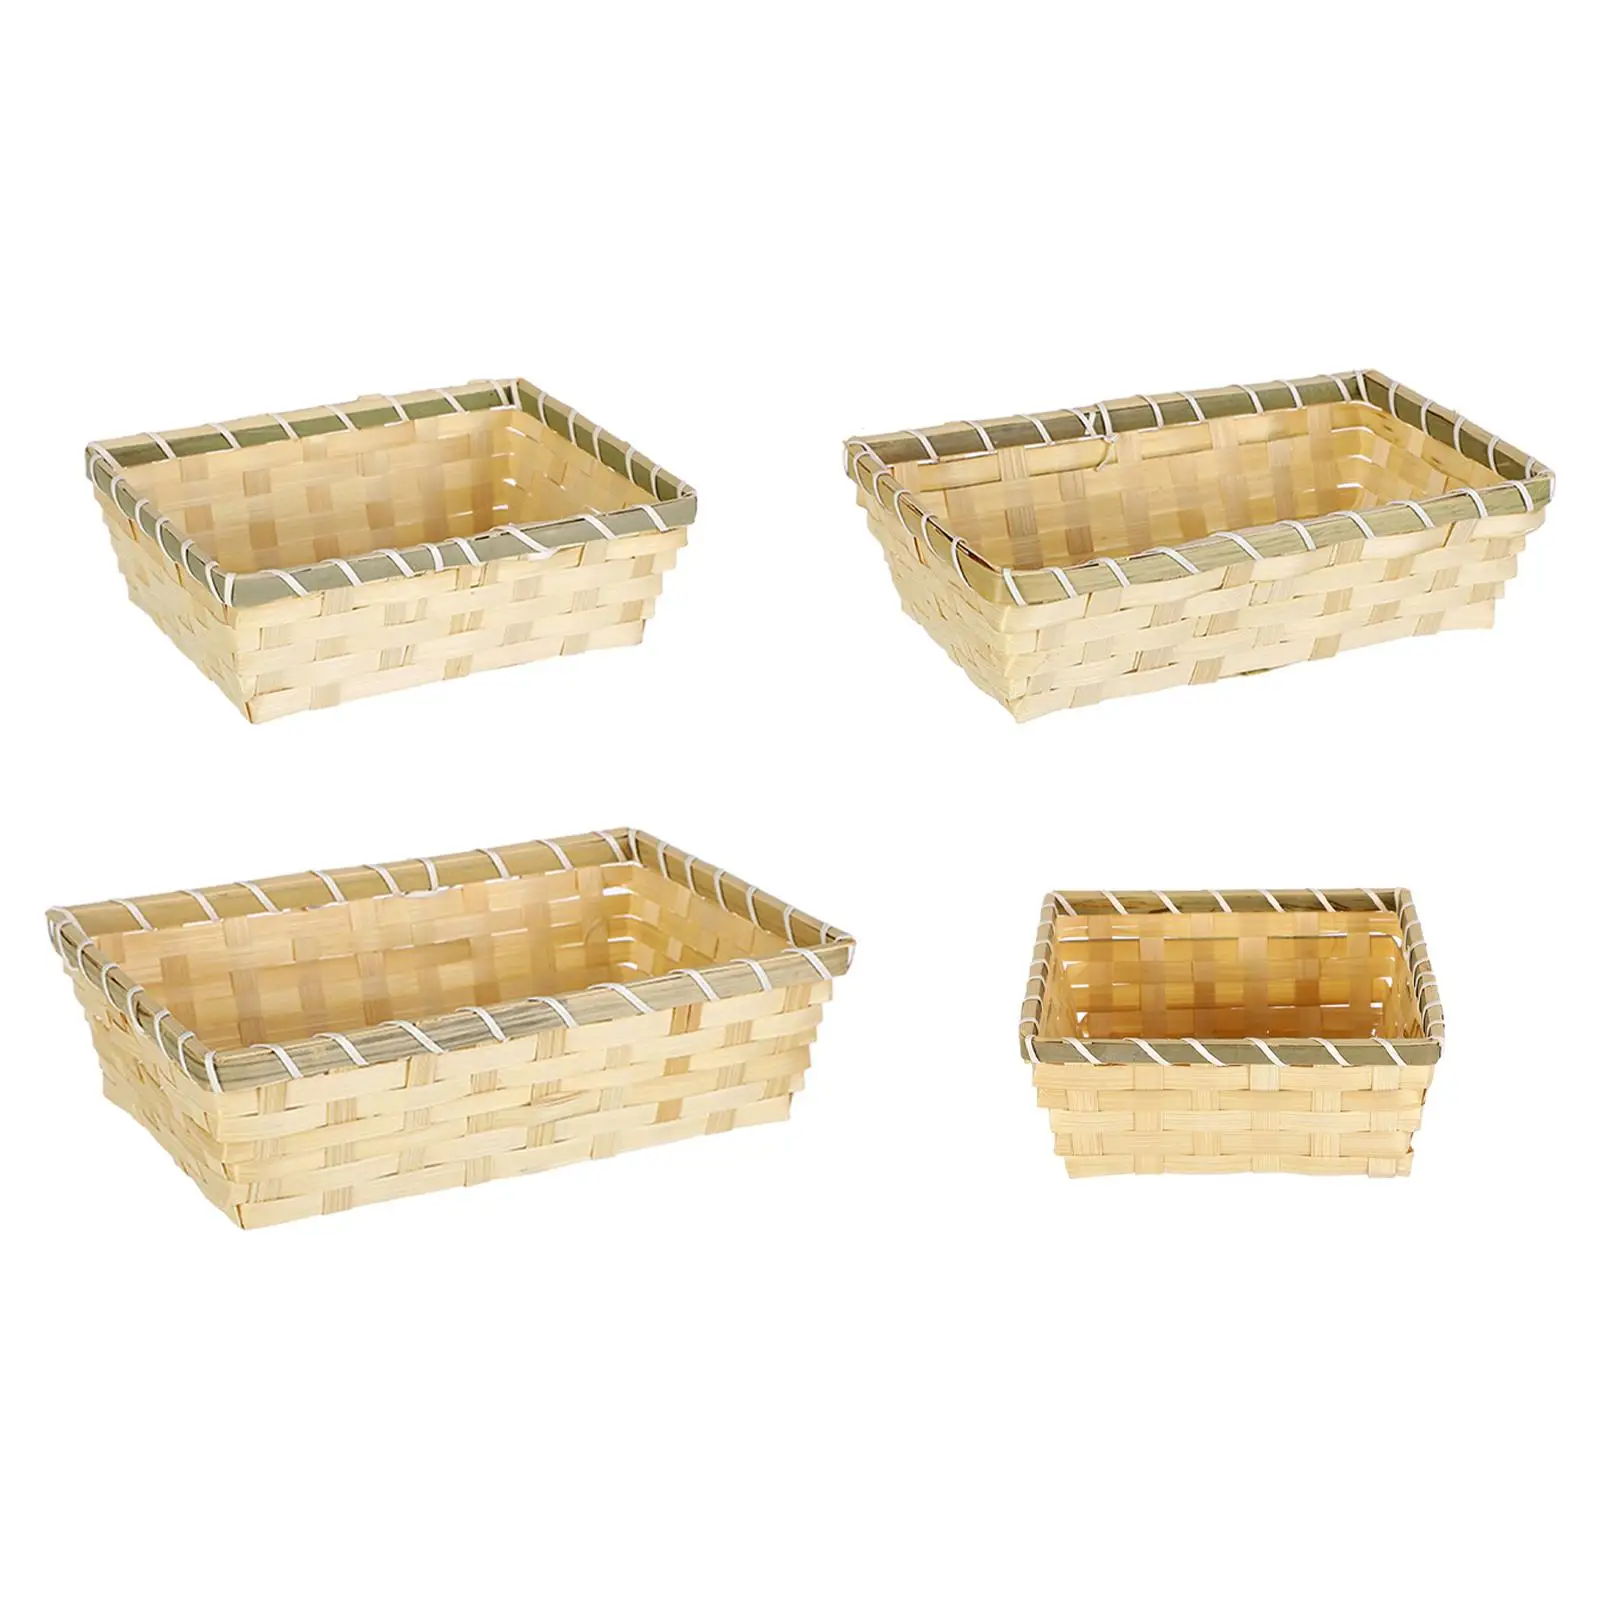 Woven Fruit Basket Snacks Sundries Egg Hadewoven Organizer Bamboo Storage Bin for Desktop Cabinets Laundry Room Closets Bathroom